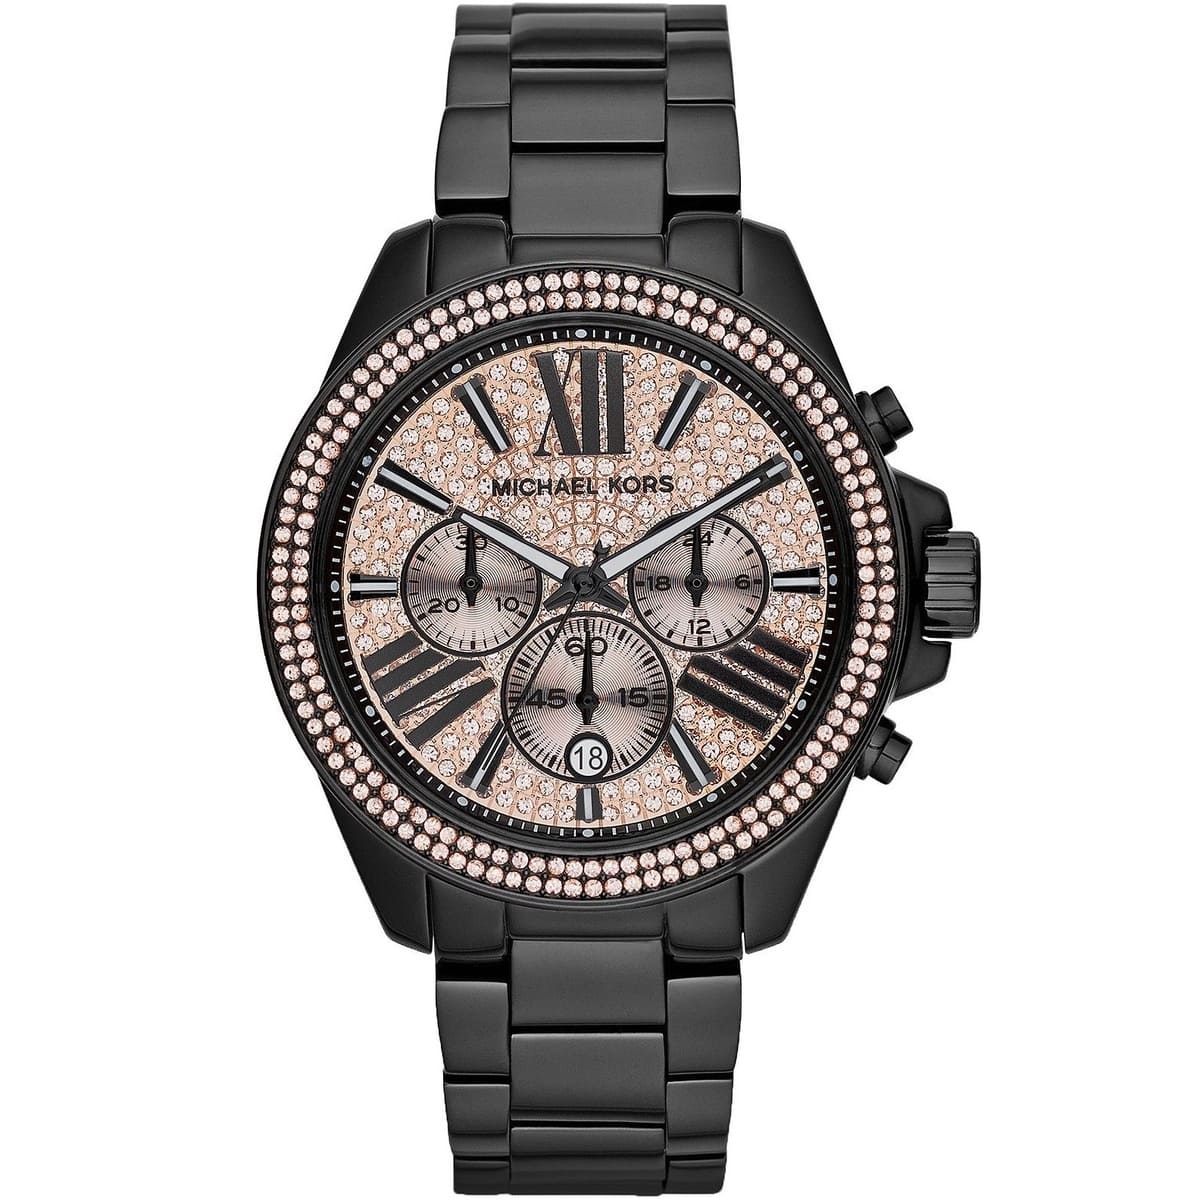 Amazoncom Michael Kors Womens Slim Runway Black Watch MK3221  Michael  Kors Clothing Shoes  Jewelry